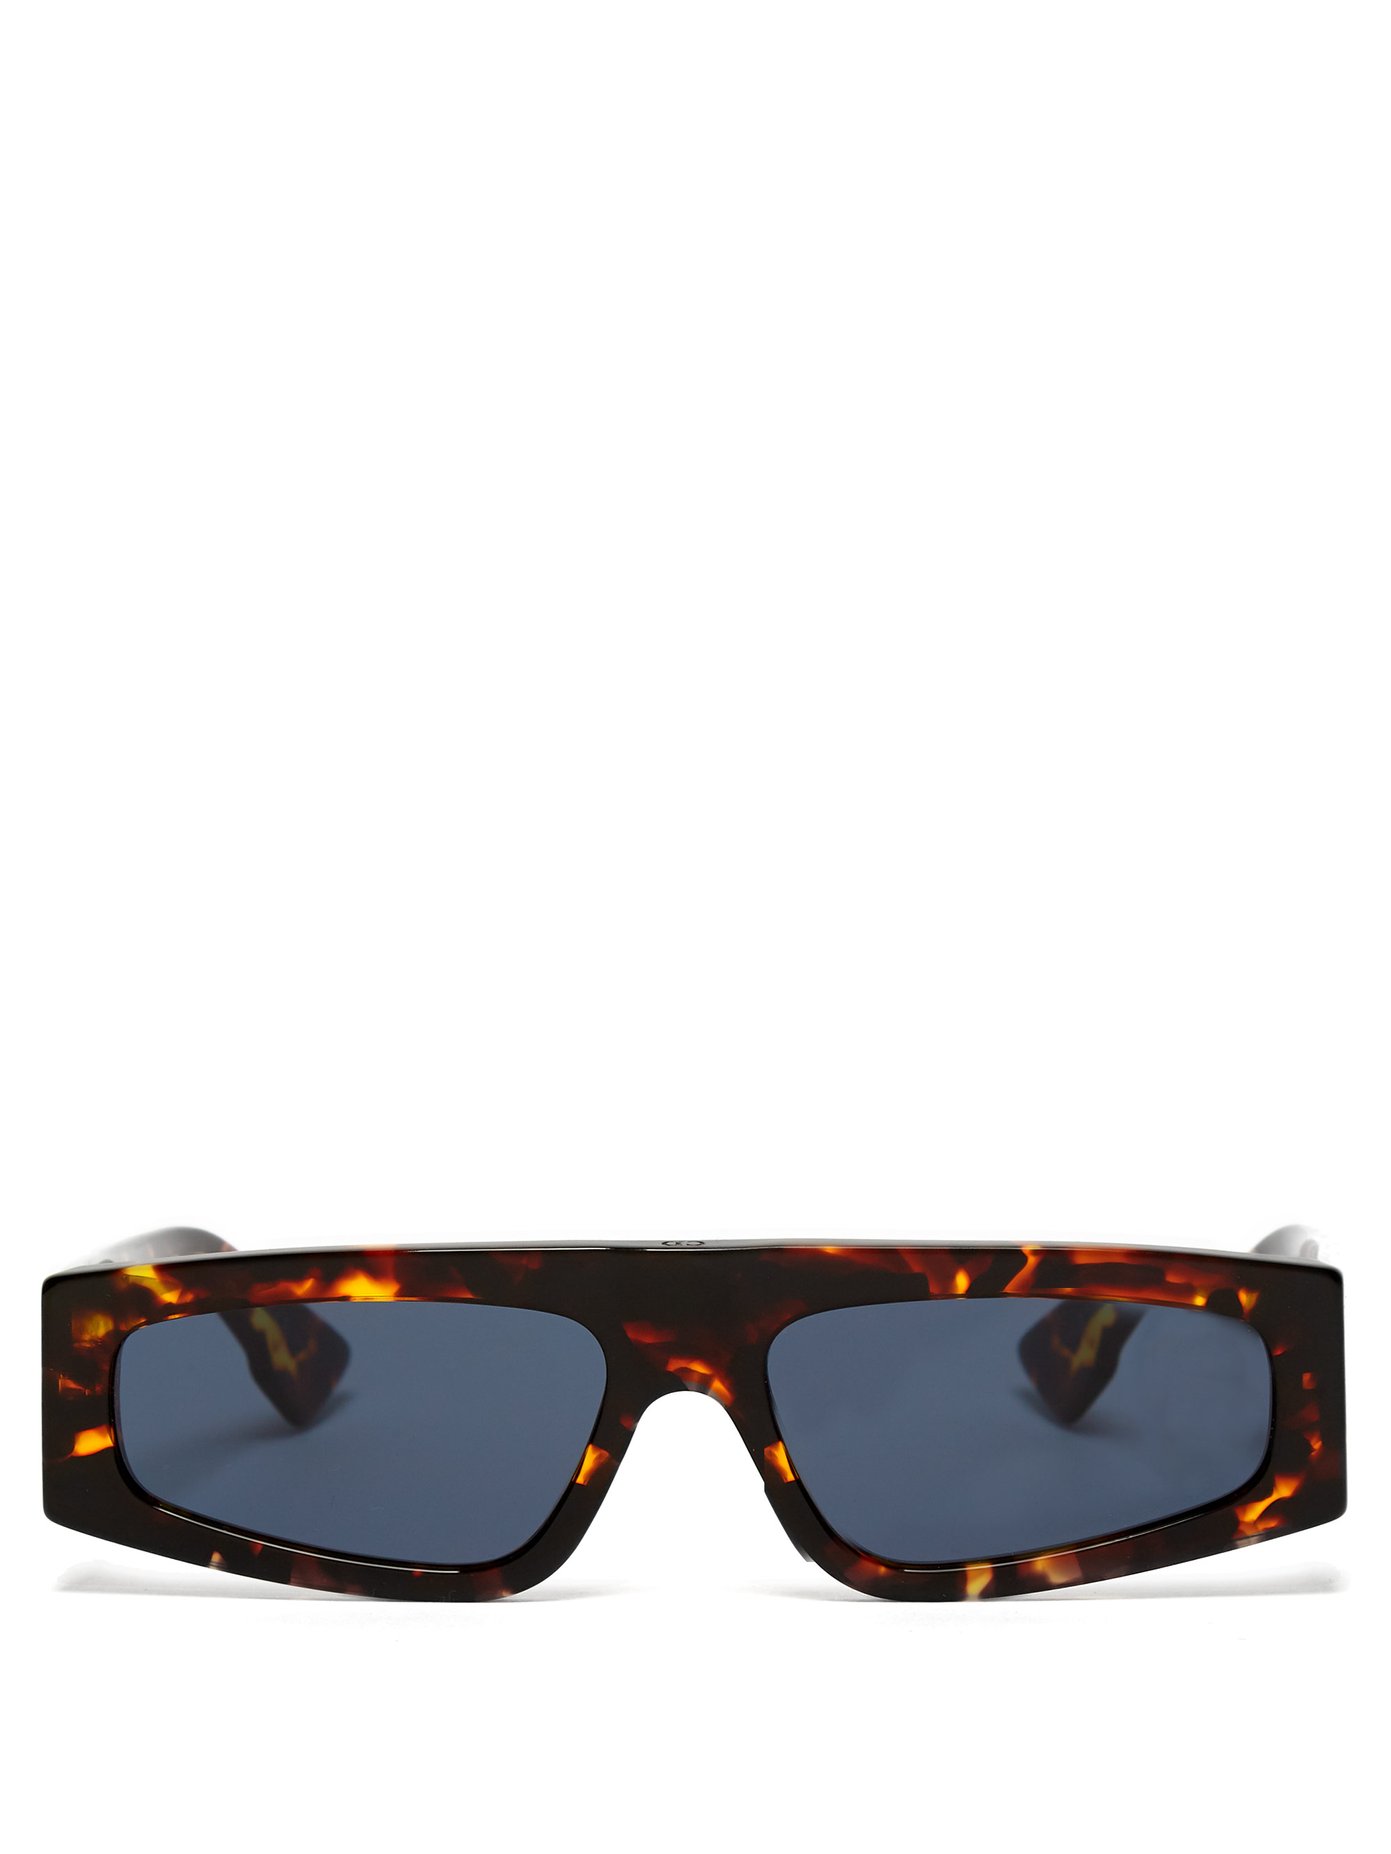 dior sunglasses tortoise